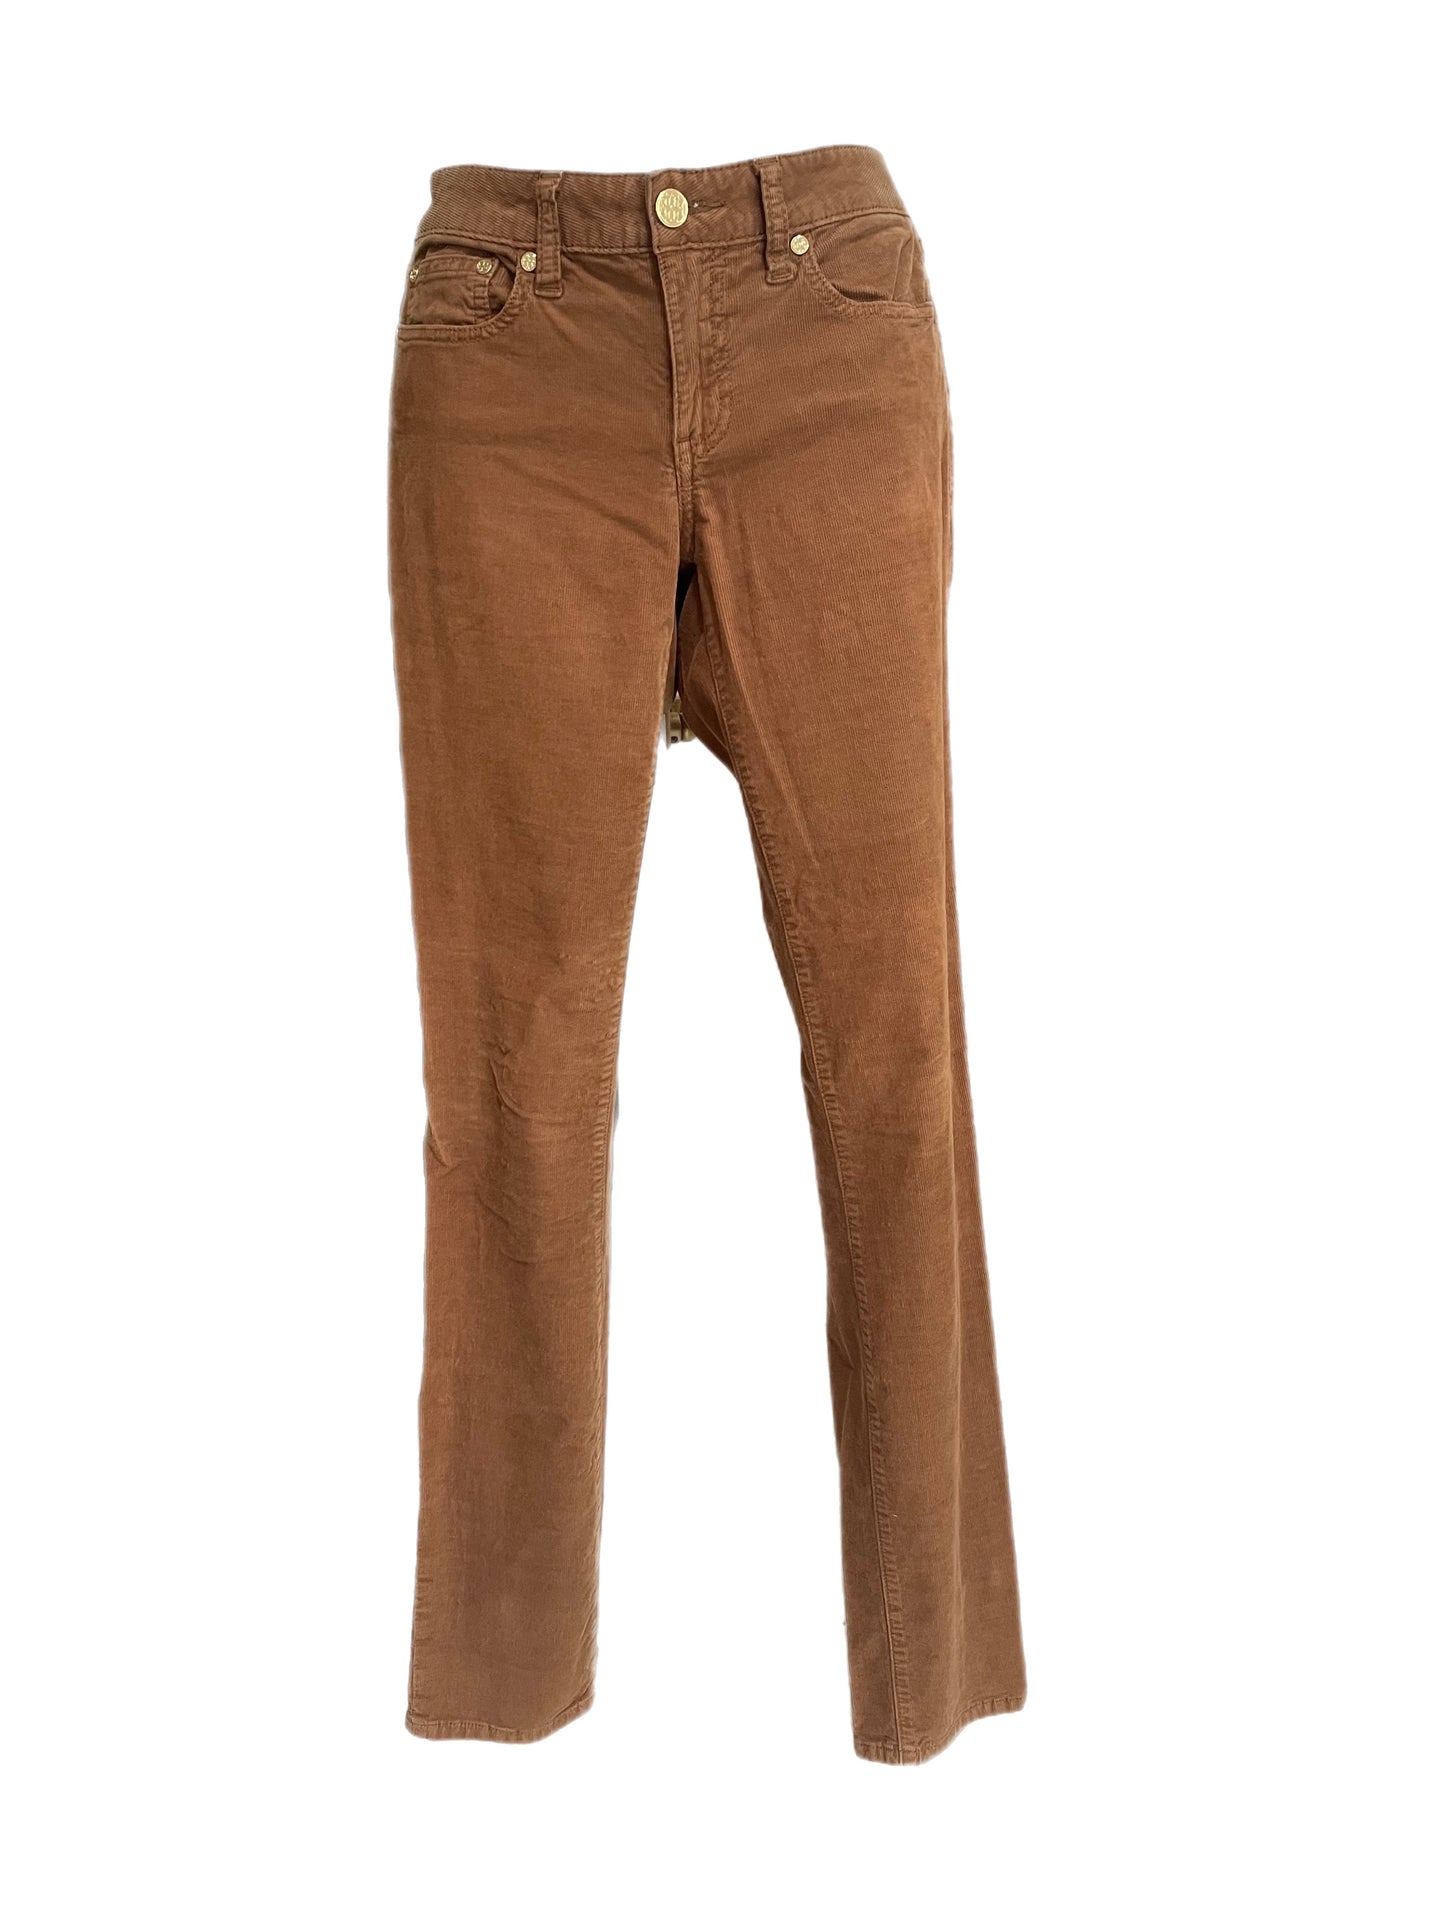 Pants-Caramel Brown Corduroy Super Skinny Pants By Tory Burch